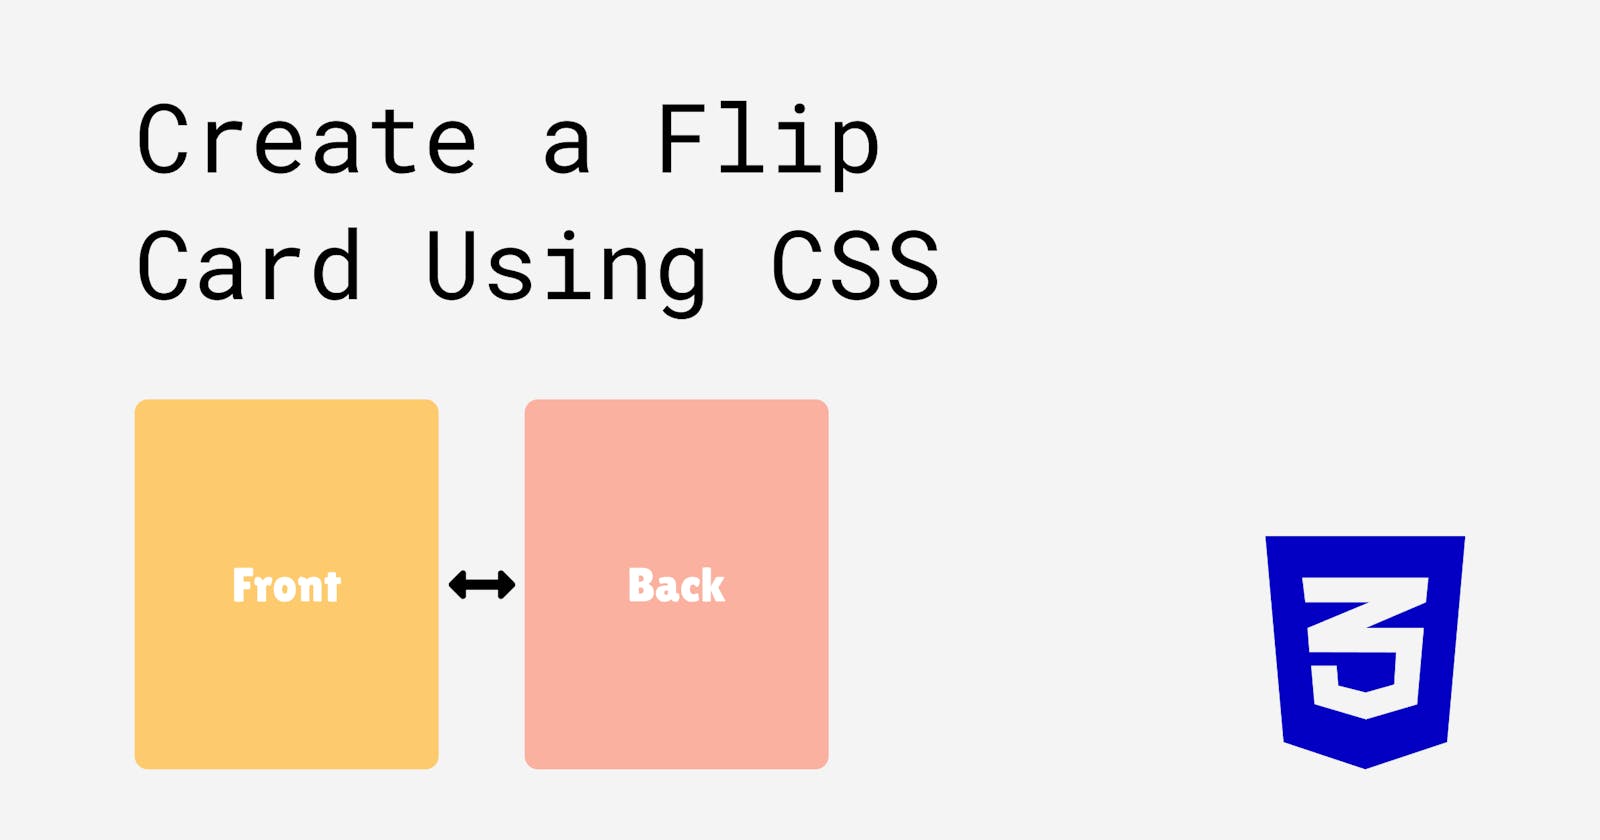 Create a Flip Card Using CSS